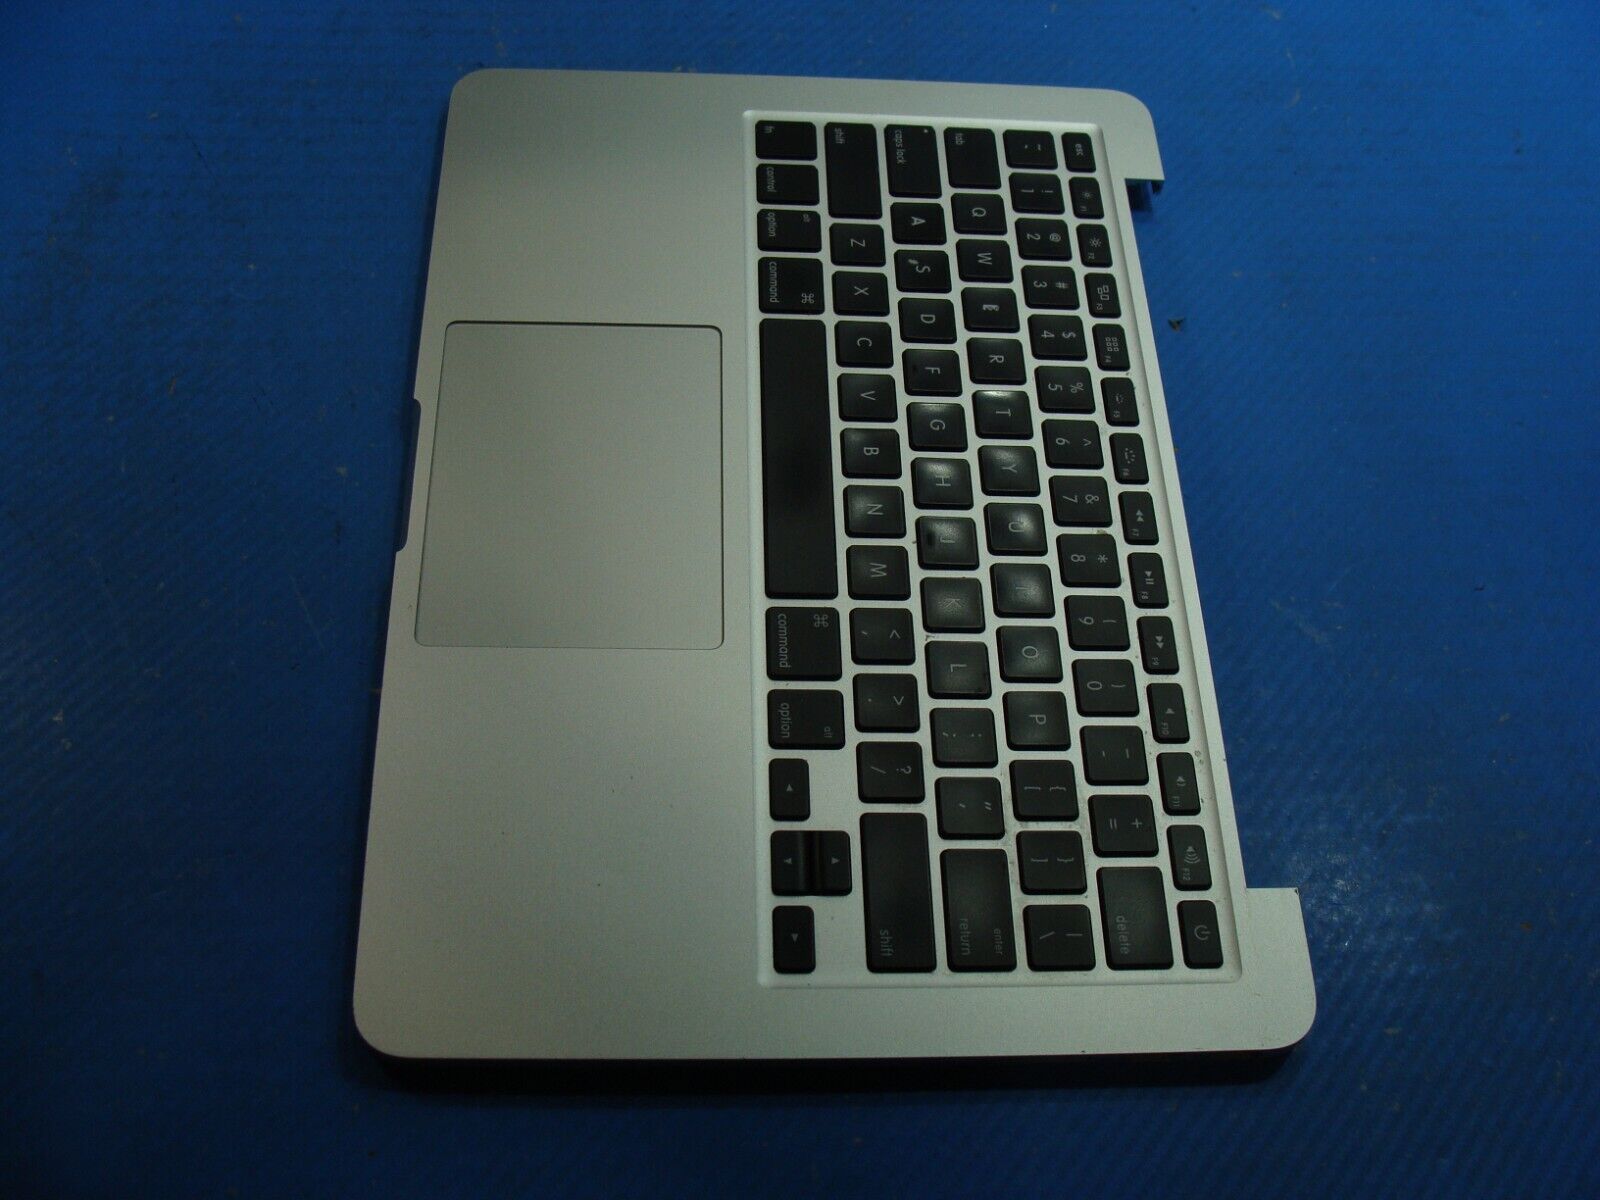 MacBook Pro A1502 13 Mid 2014 MGX72LL/A Top Case w/Keyboard Silver 661-8154